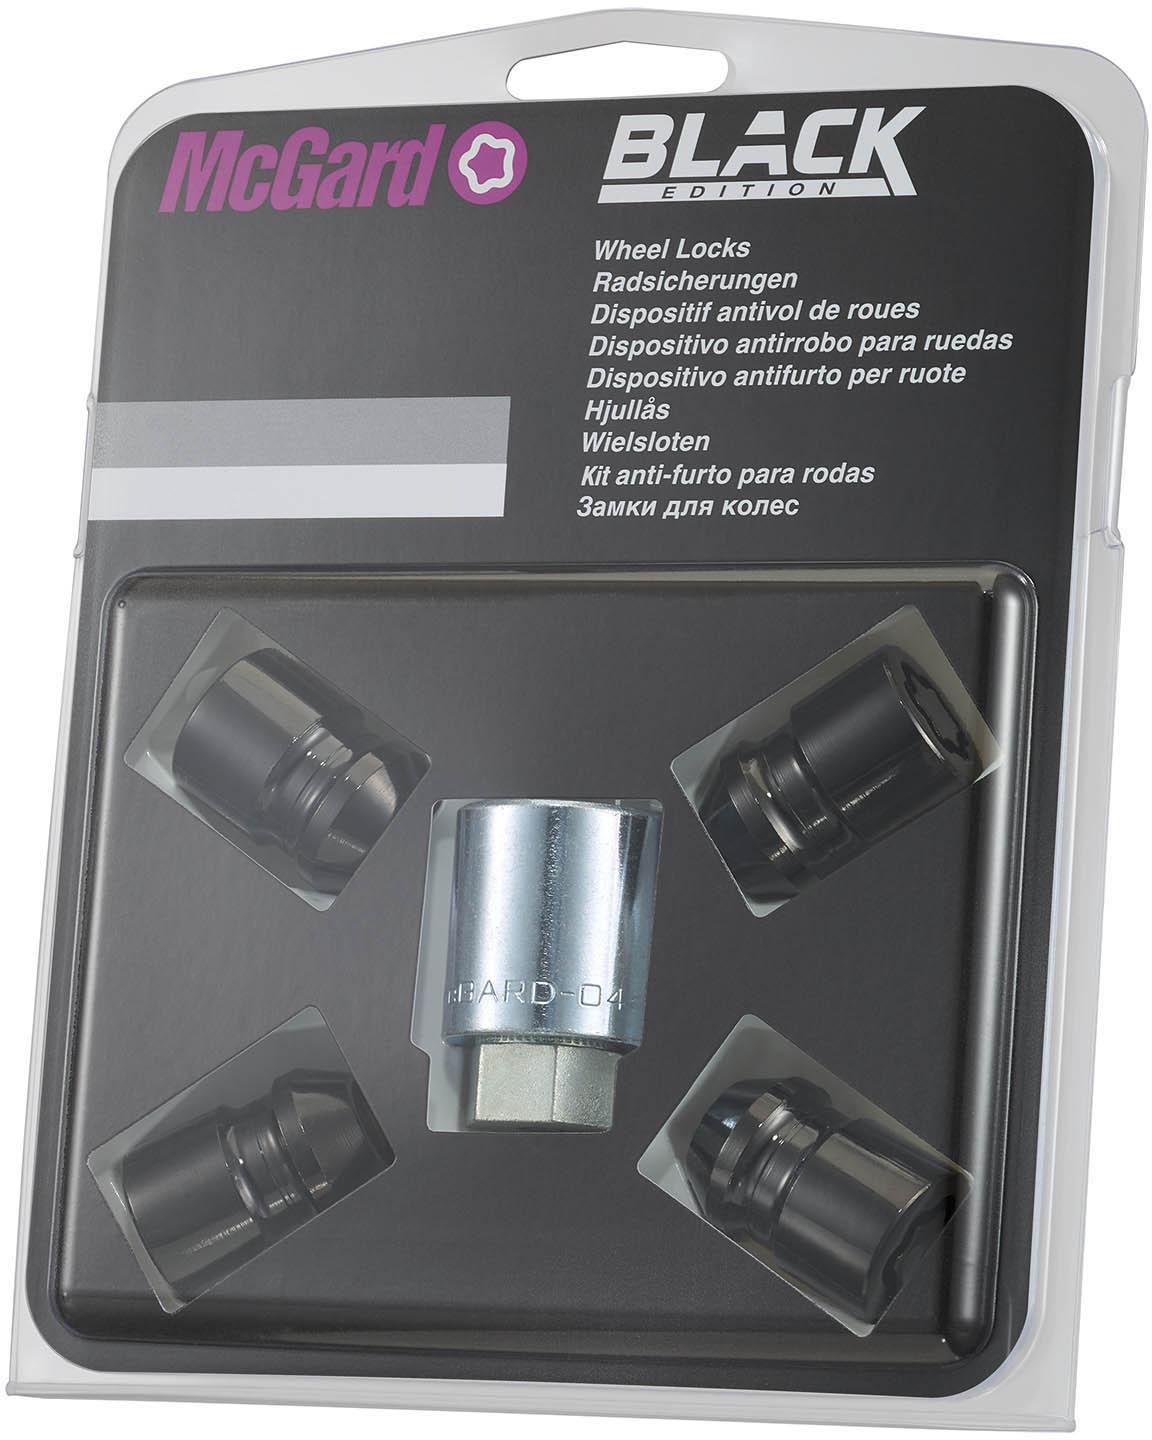 Mcgard Black Edition Security Locking Wheel Nuts 24193Sub